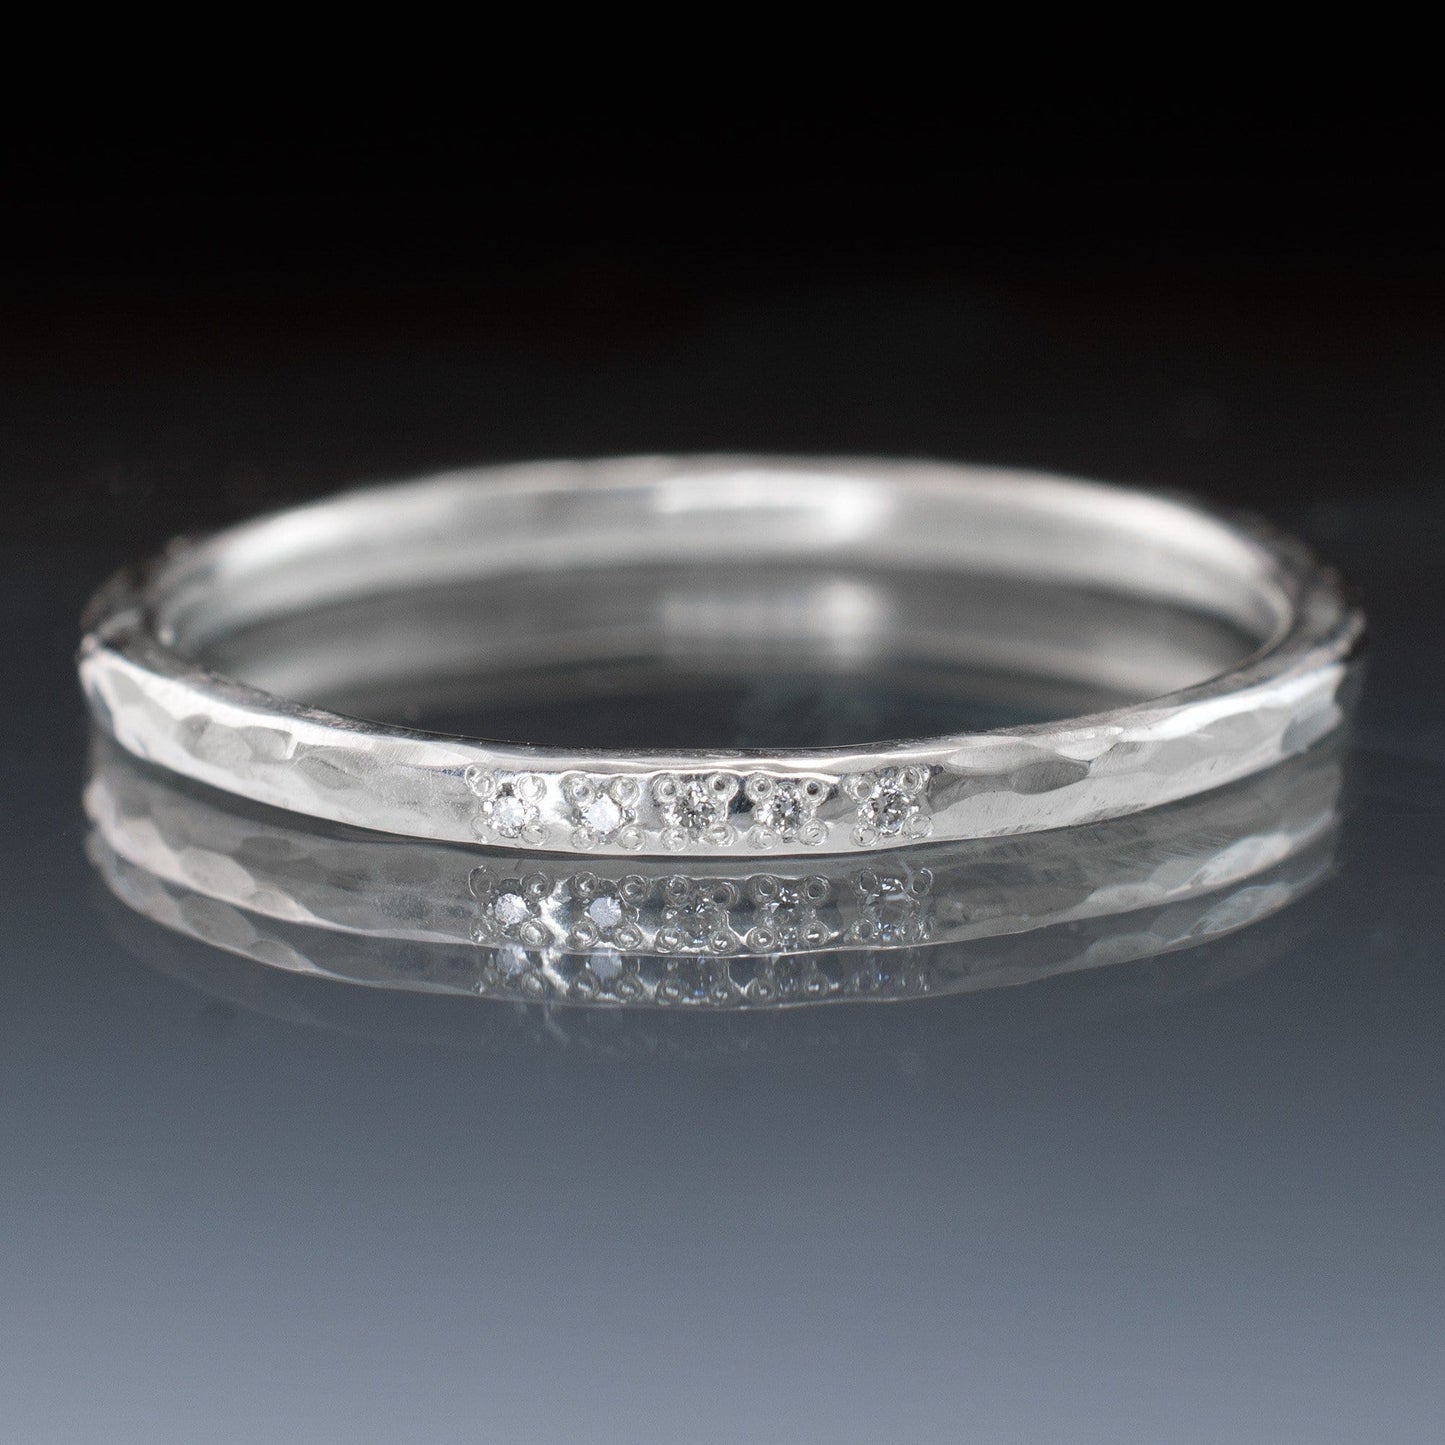 Hammered Texture Bead Set Diamond Thin Wedding Ring Ring by Nodeform